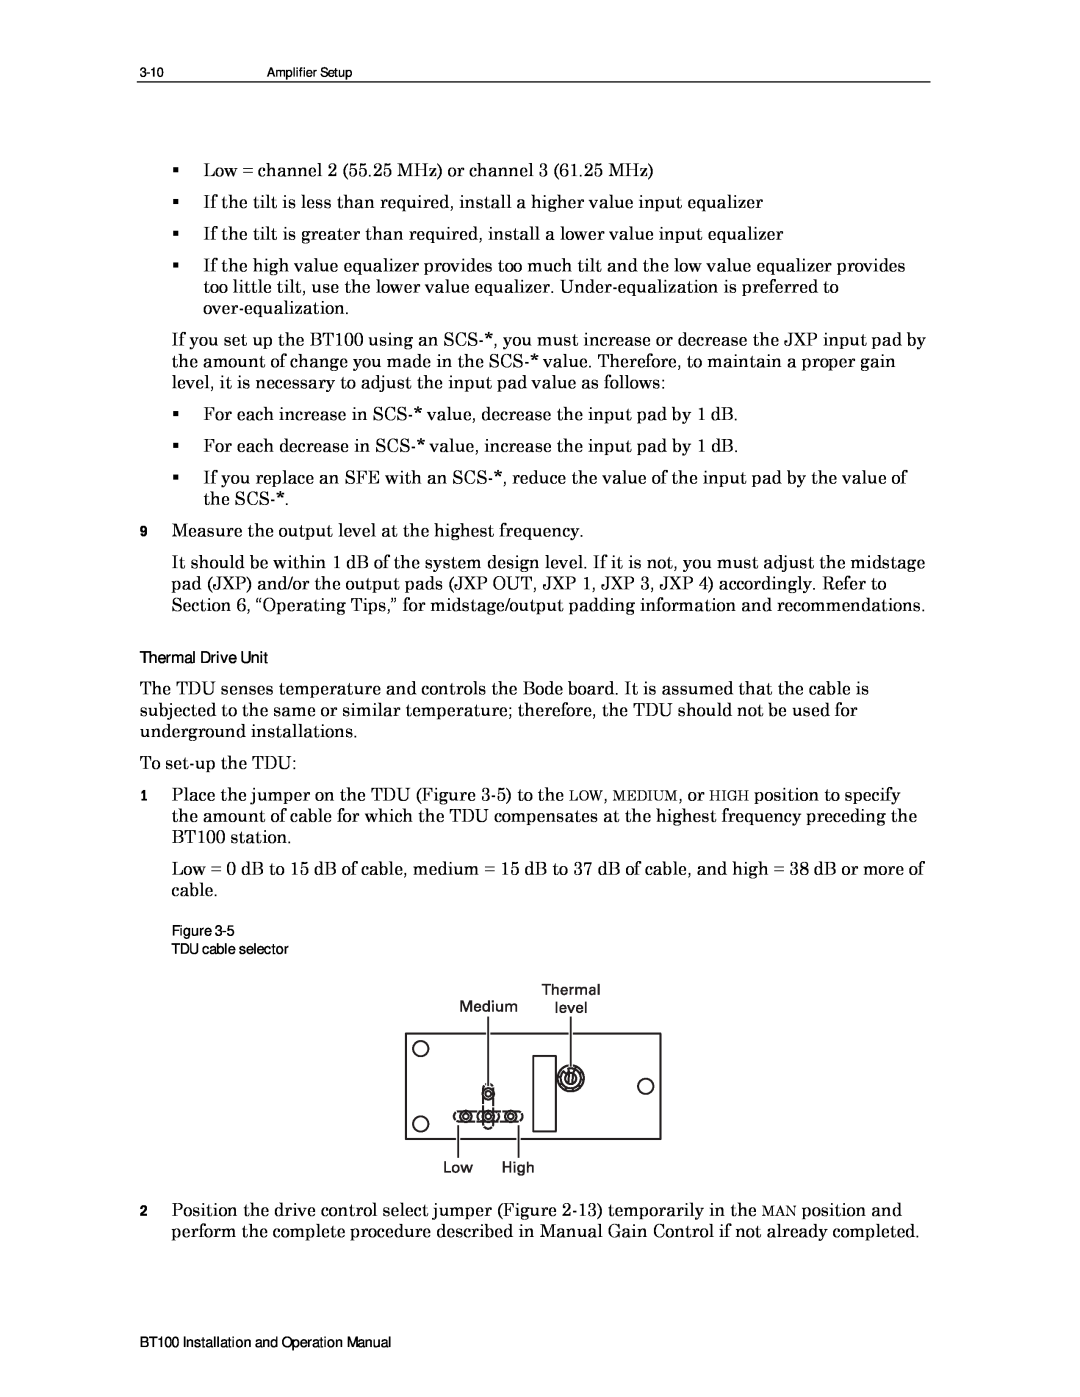 Motorola BT100 operation manual Thermal Drive Unit 